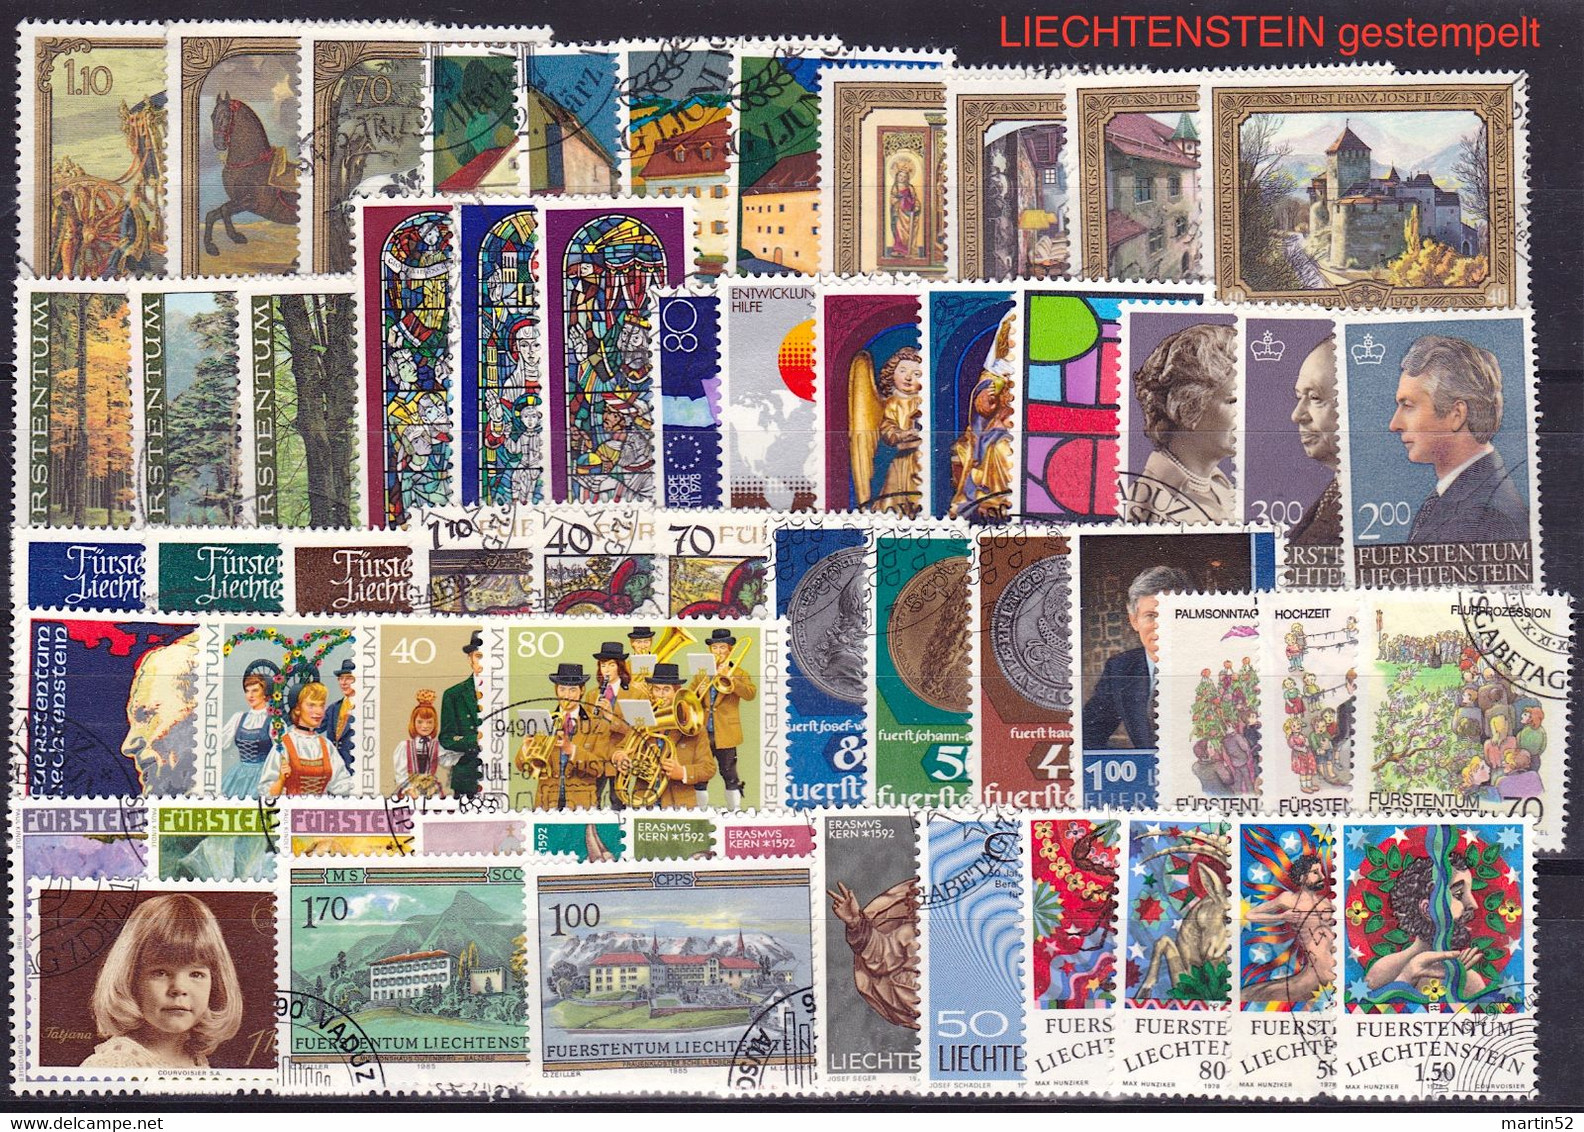 Liechtenstein 1970s/1980s: Set Mit 57 Marken (aus Dem Verkehr & ET-o) Jeu Avec 57 Timbres (du Trafic & Premier Jour) - Collections